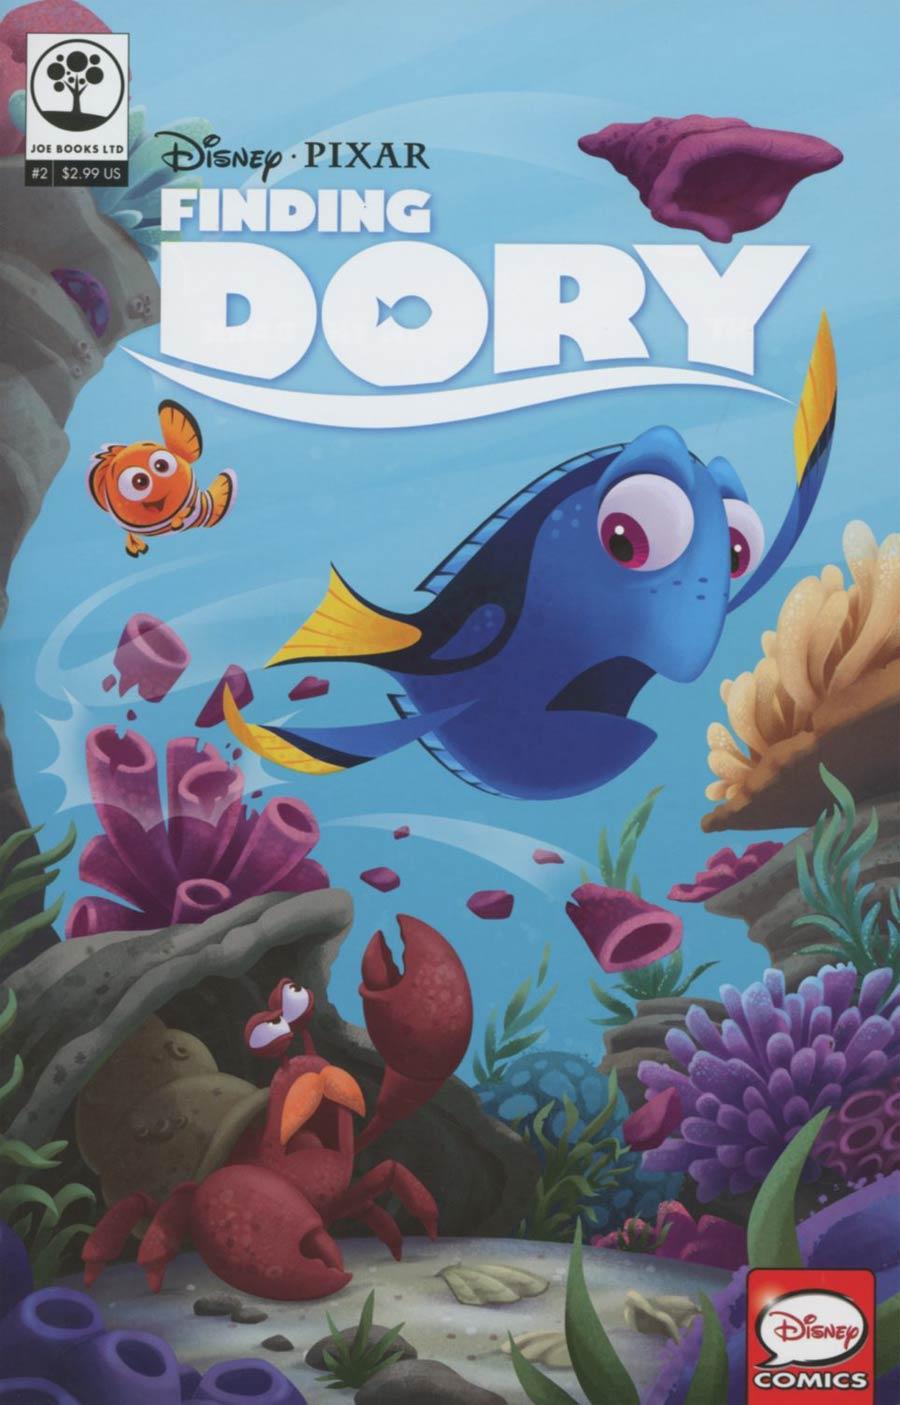 Disney Pixars Finding Dory Vol. 1 #2